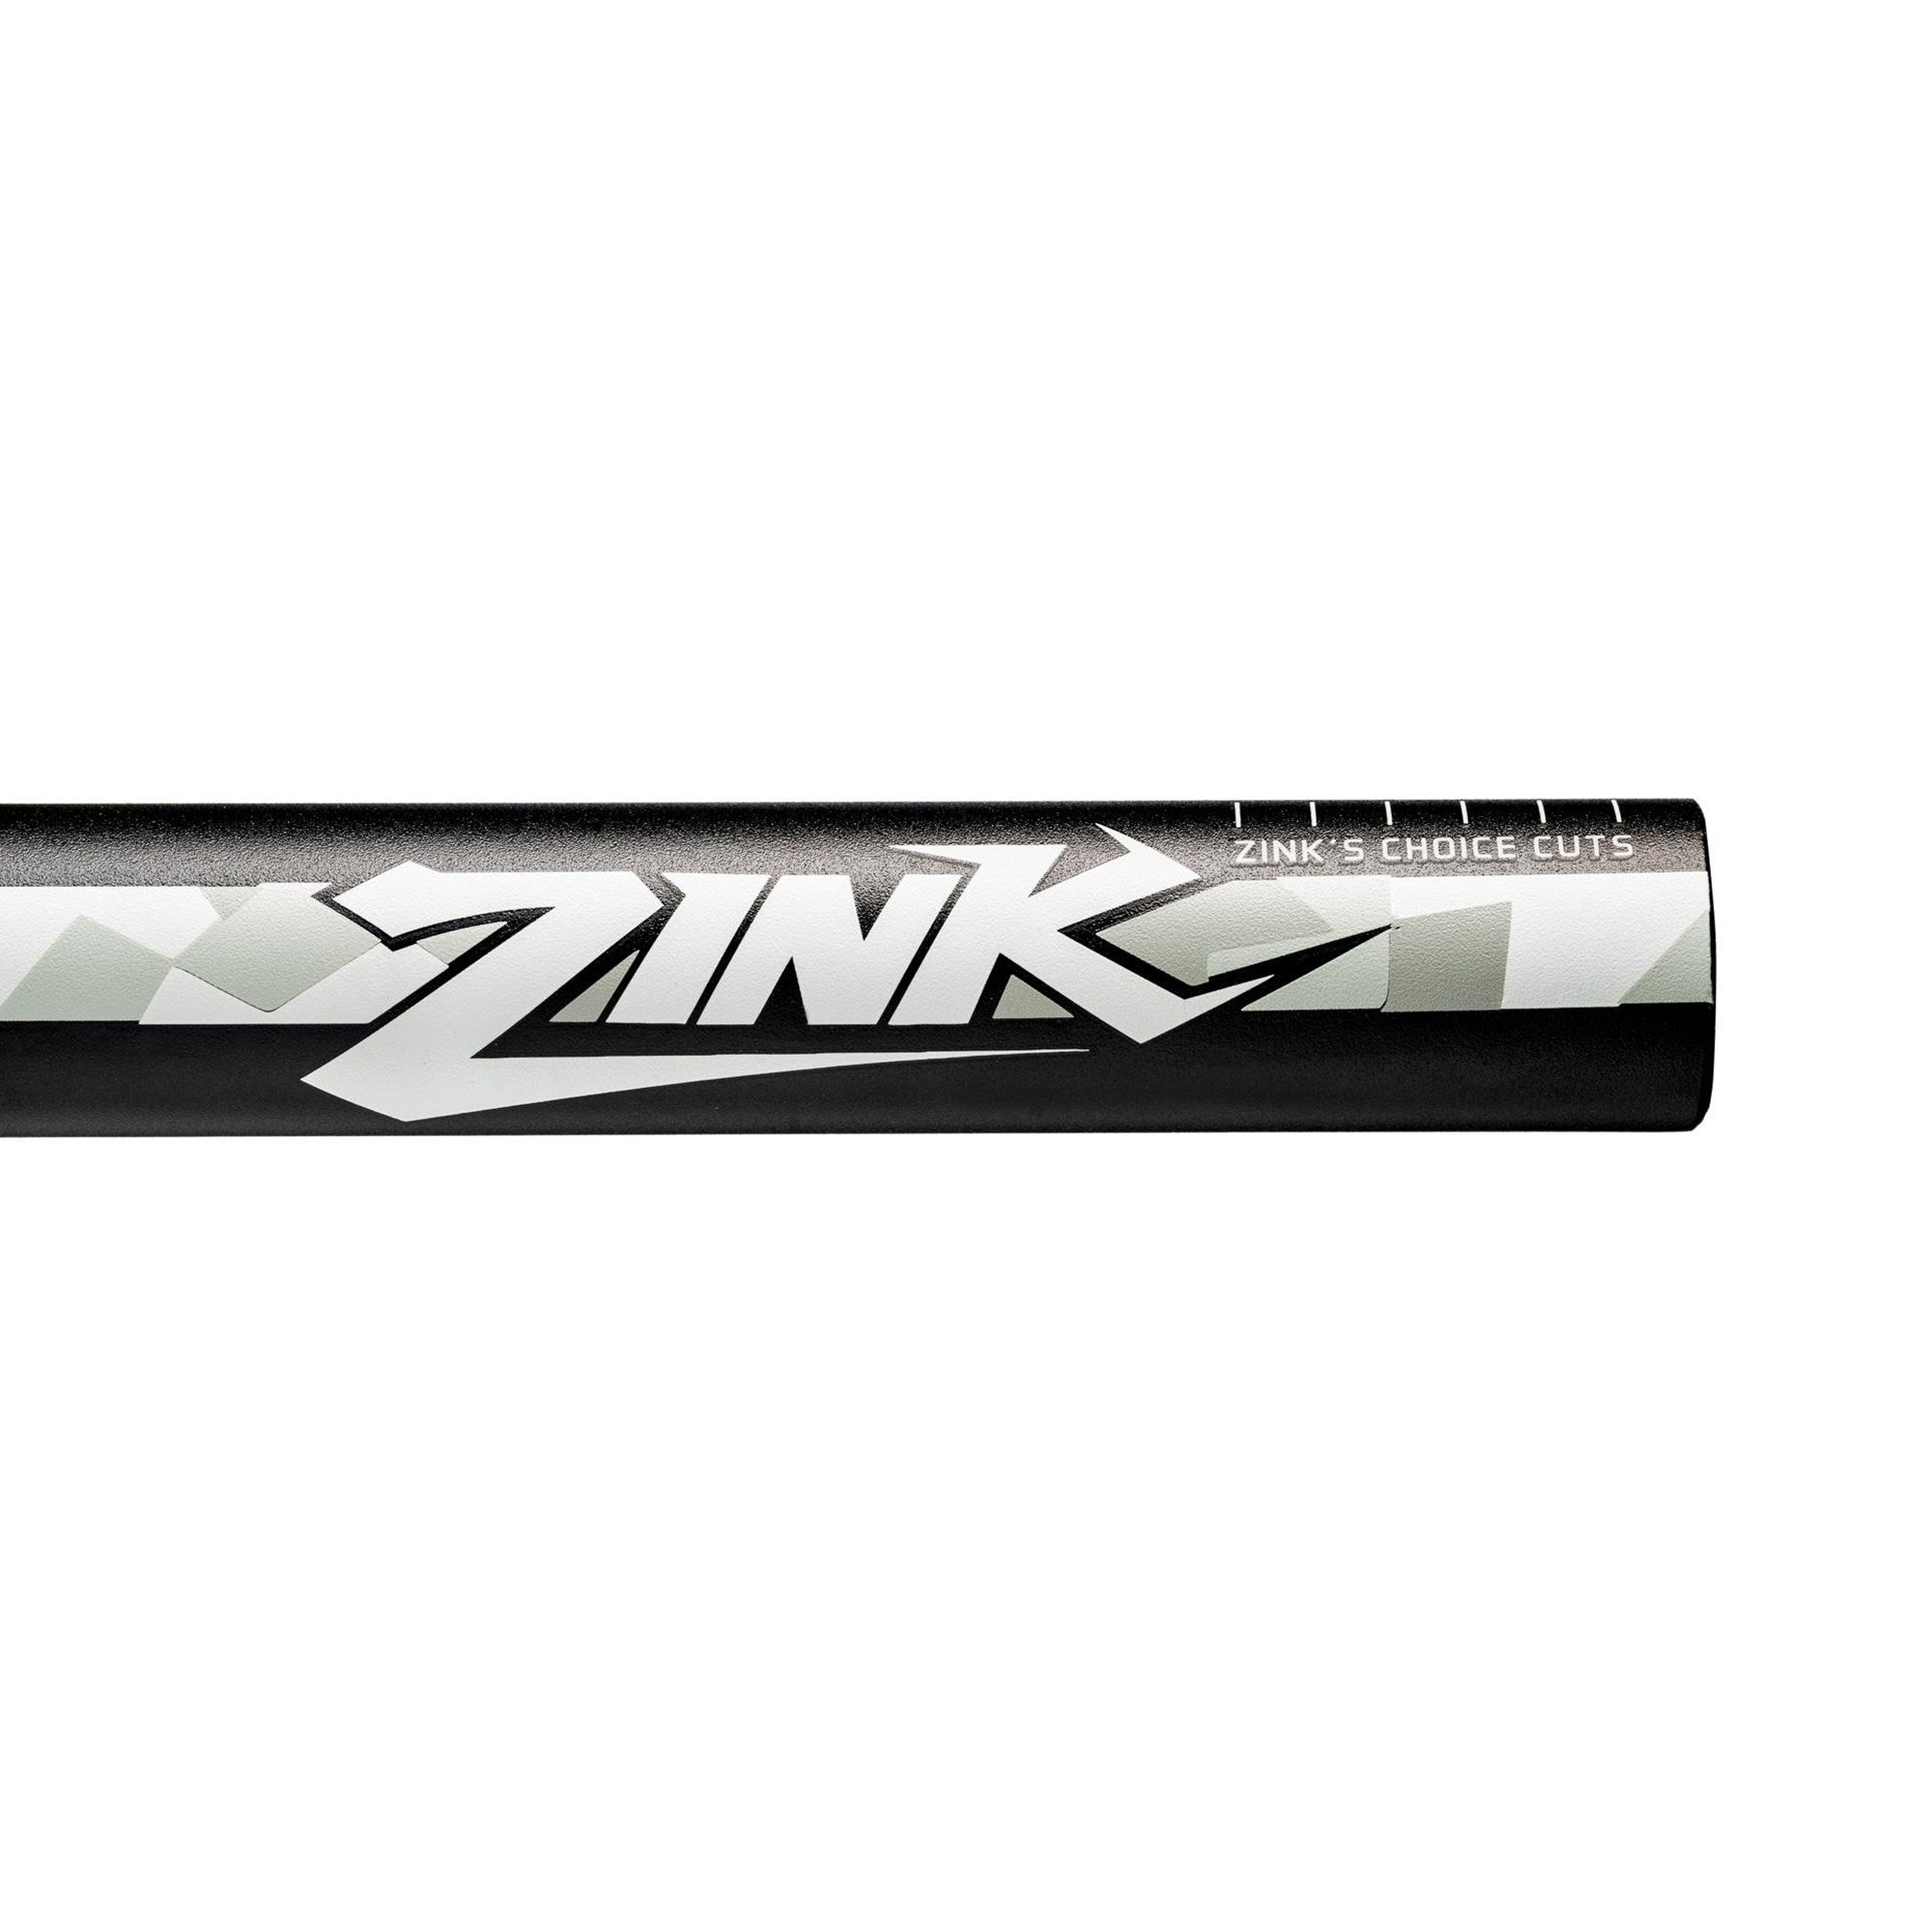 Deity CZ40 Cam Zink Signature Bars